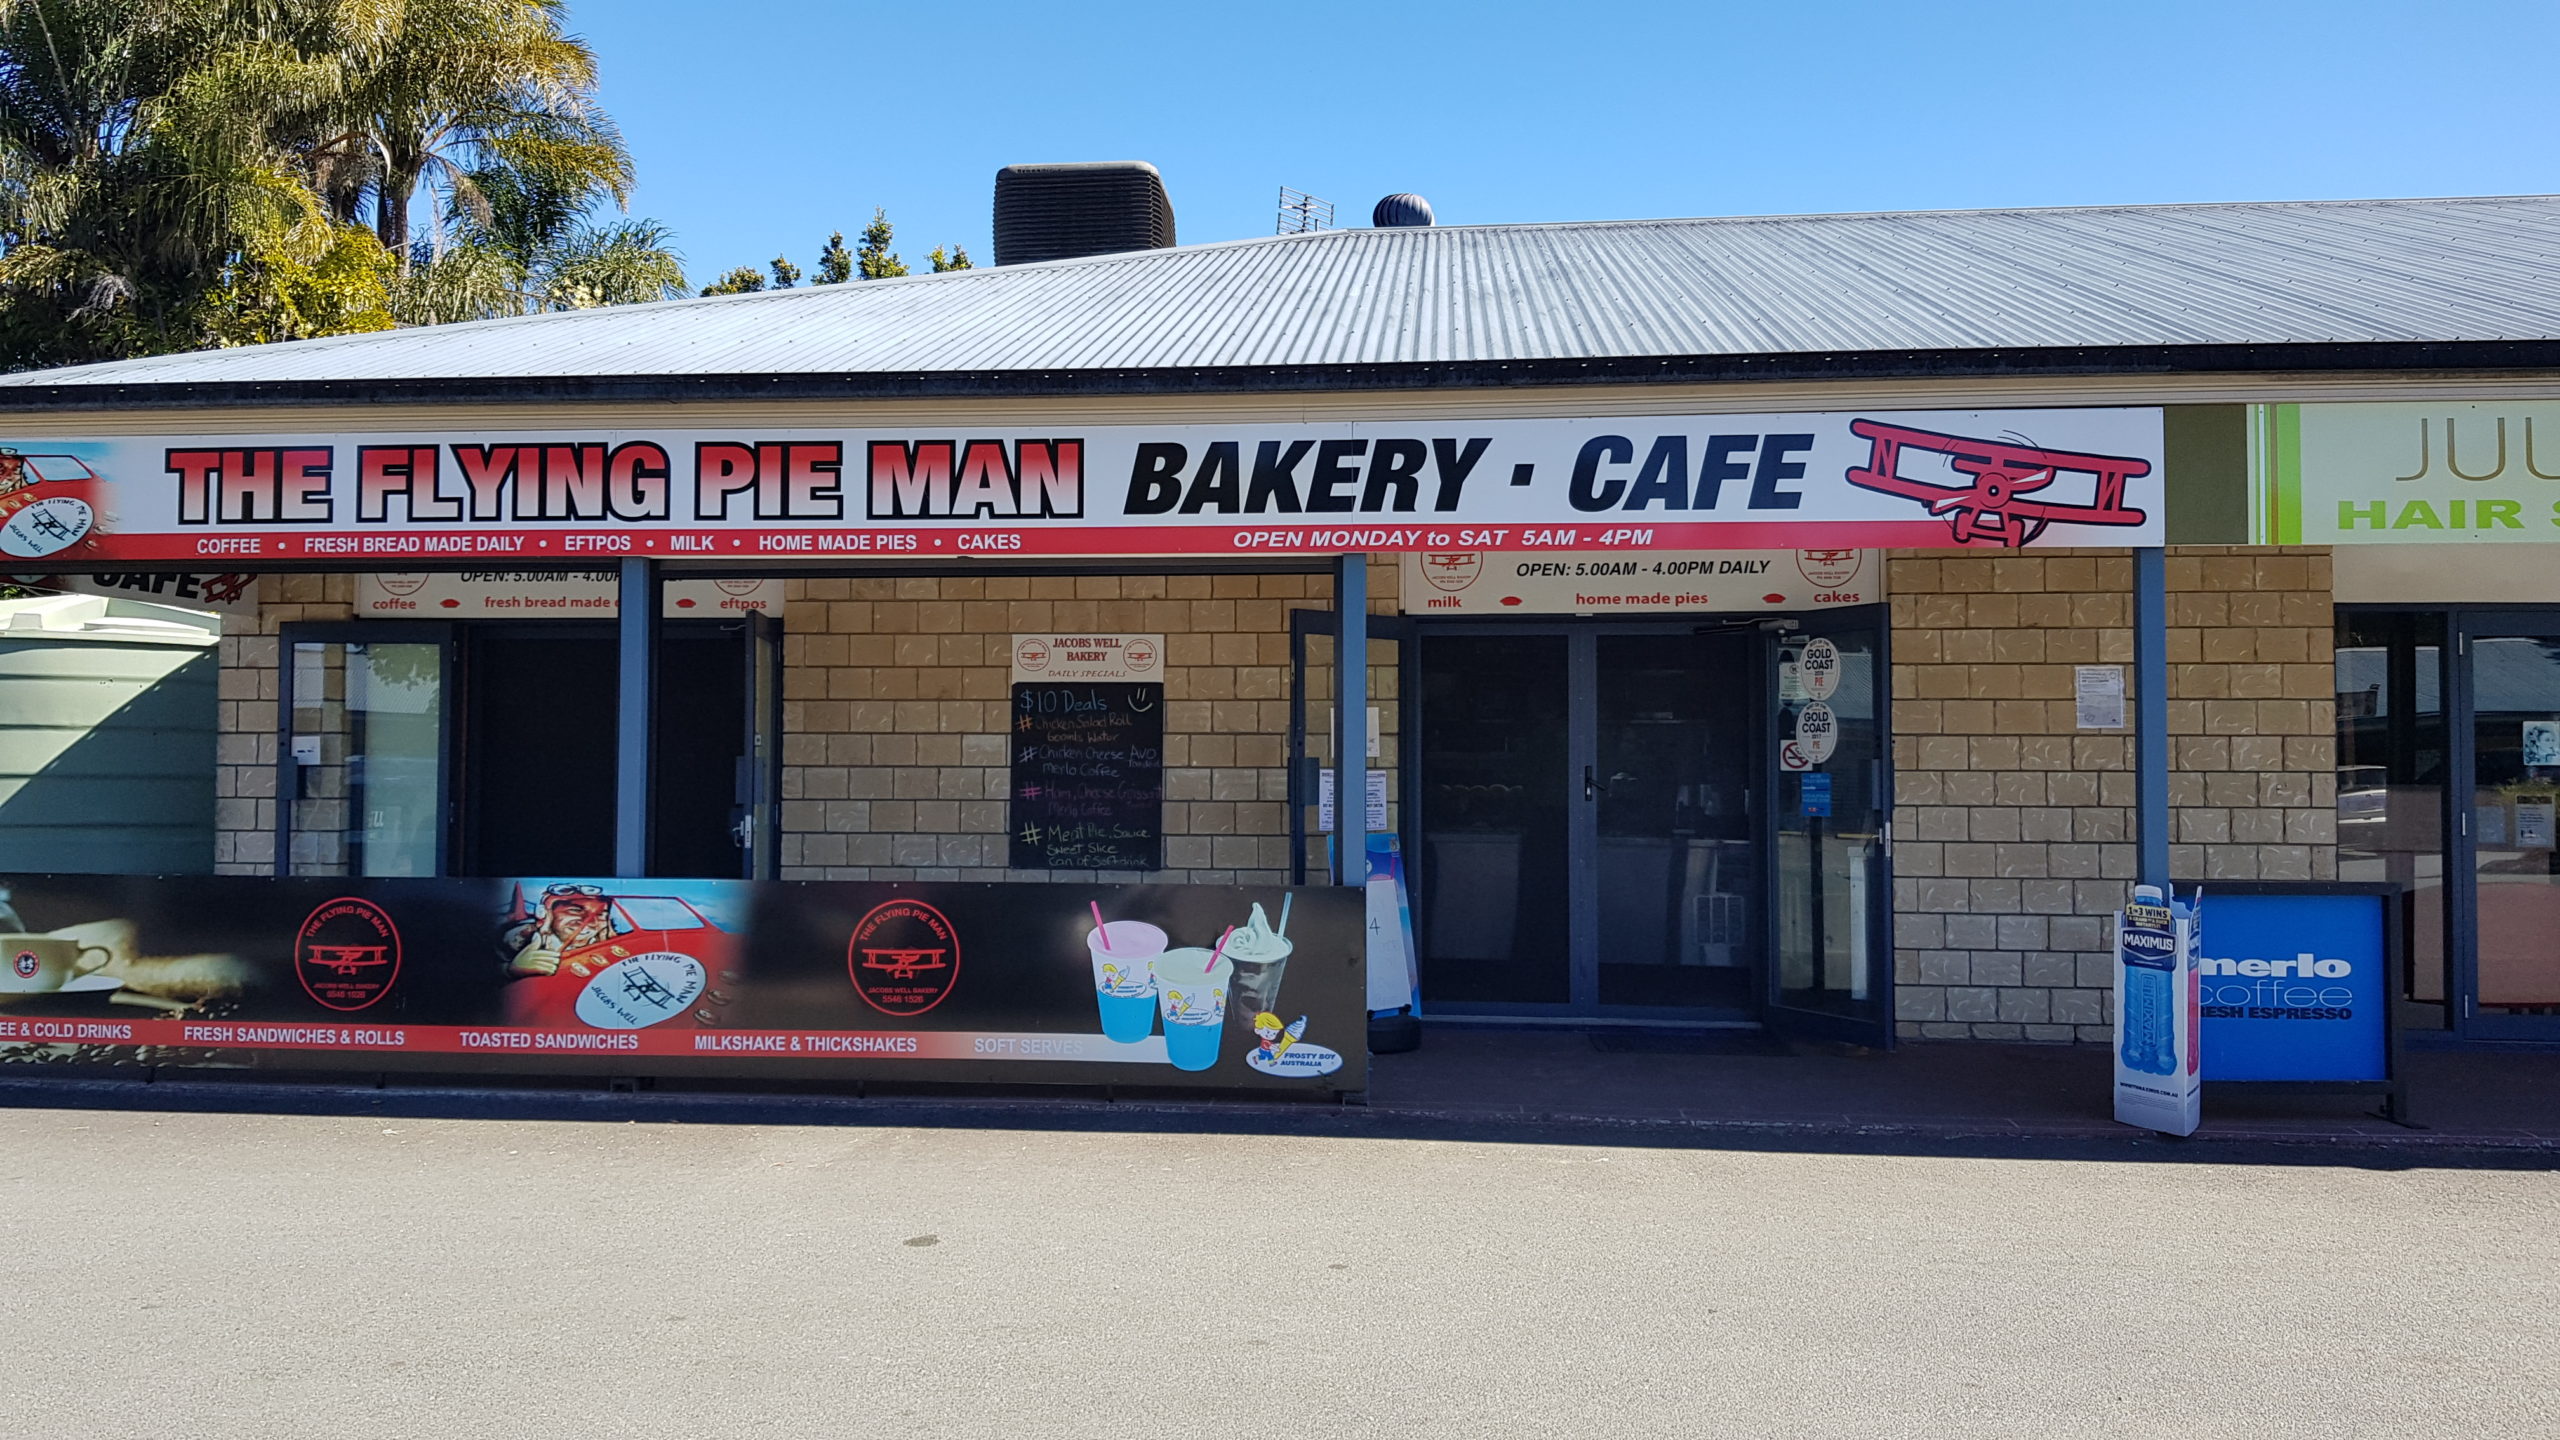 The Flying Pieman Bakery